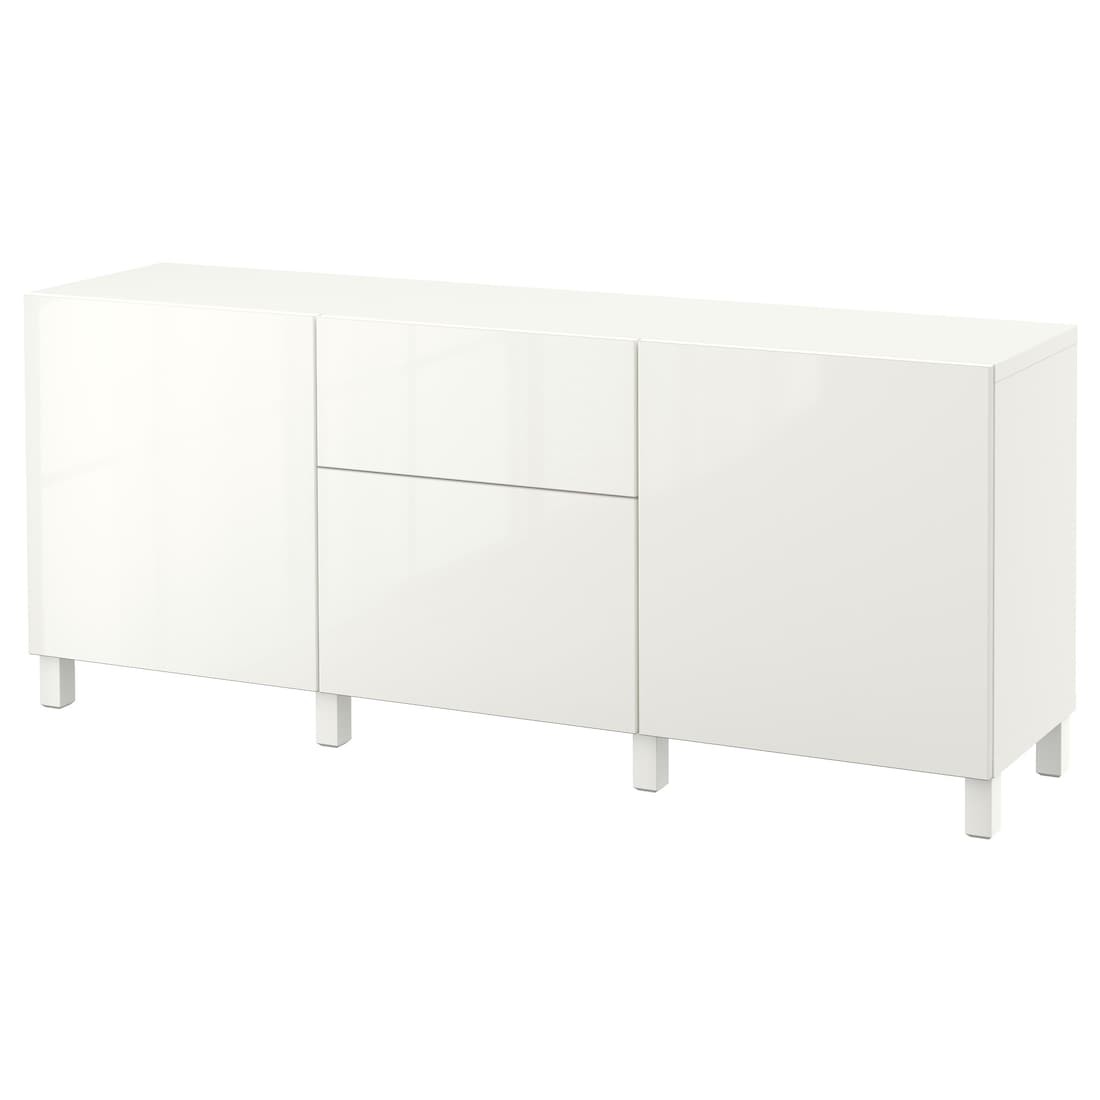 IKEA BESTÅ БЕСТО Комбинация для хранения с ящиками, белый / Selsviken / Stubbarp глянцевый / белый, 180x42x74 см 19195663 191.956.63